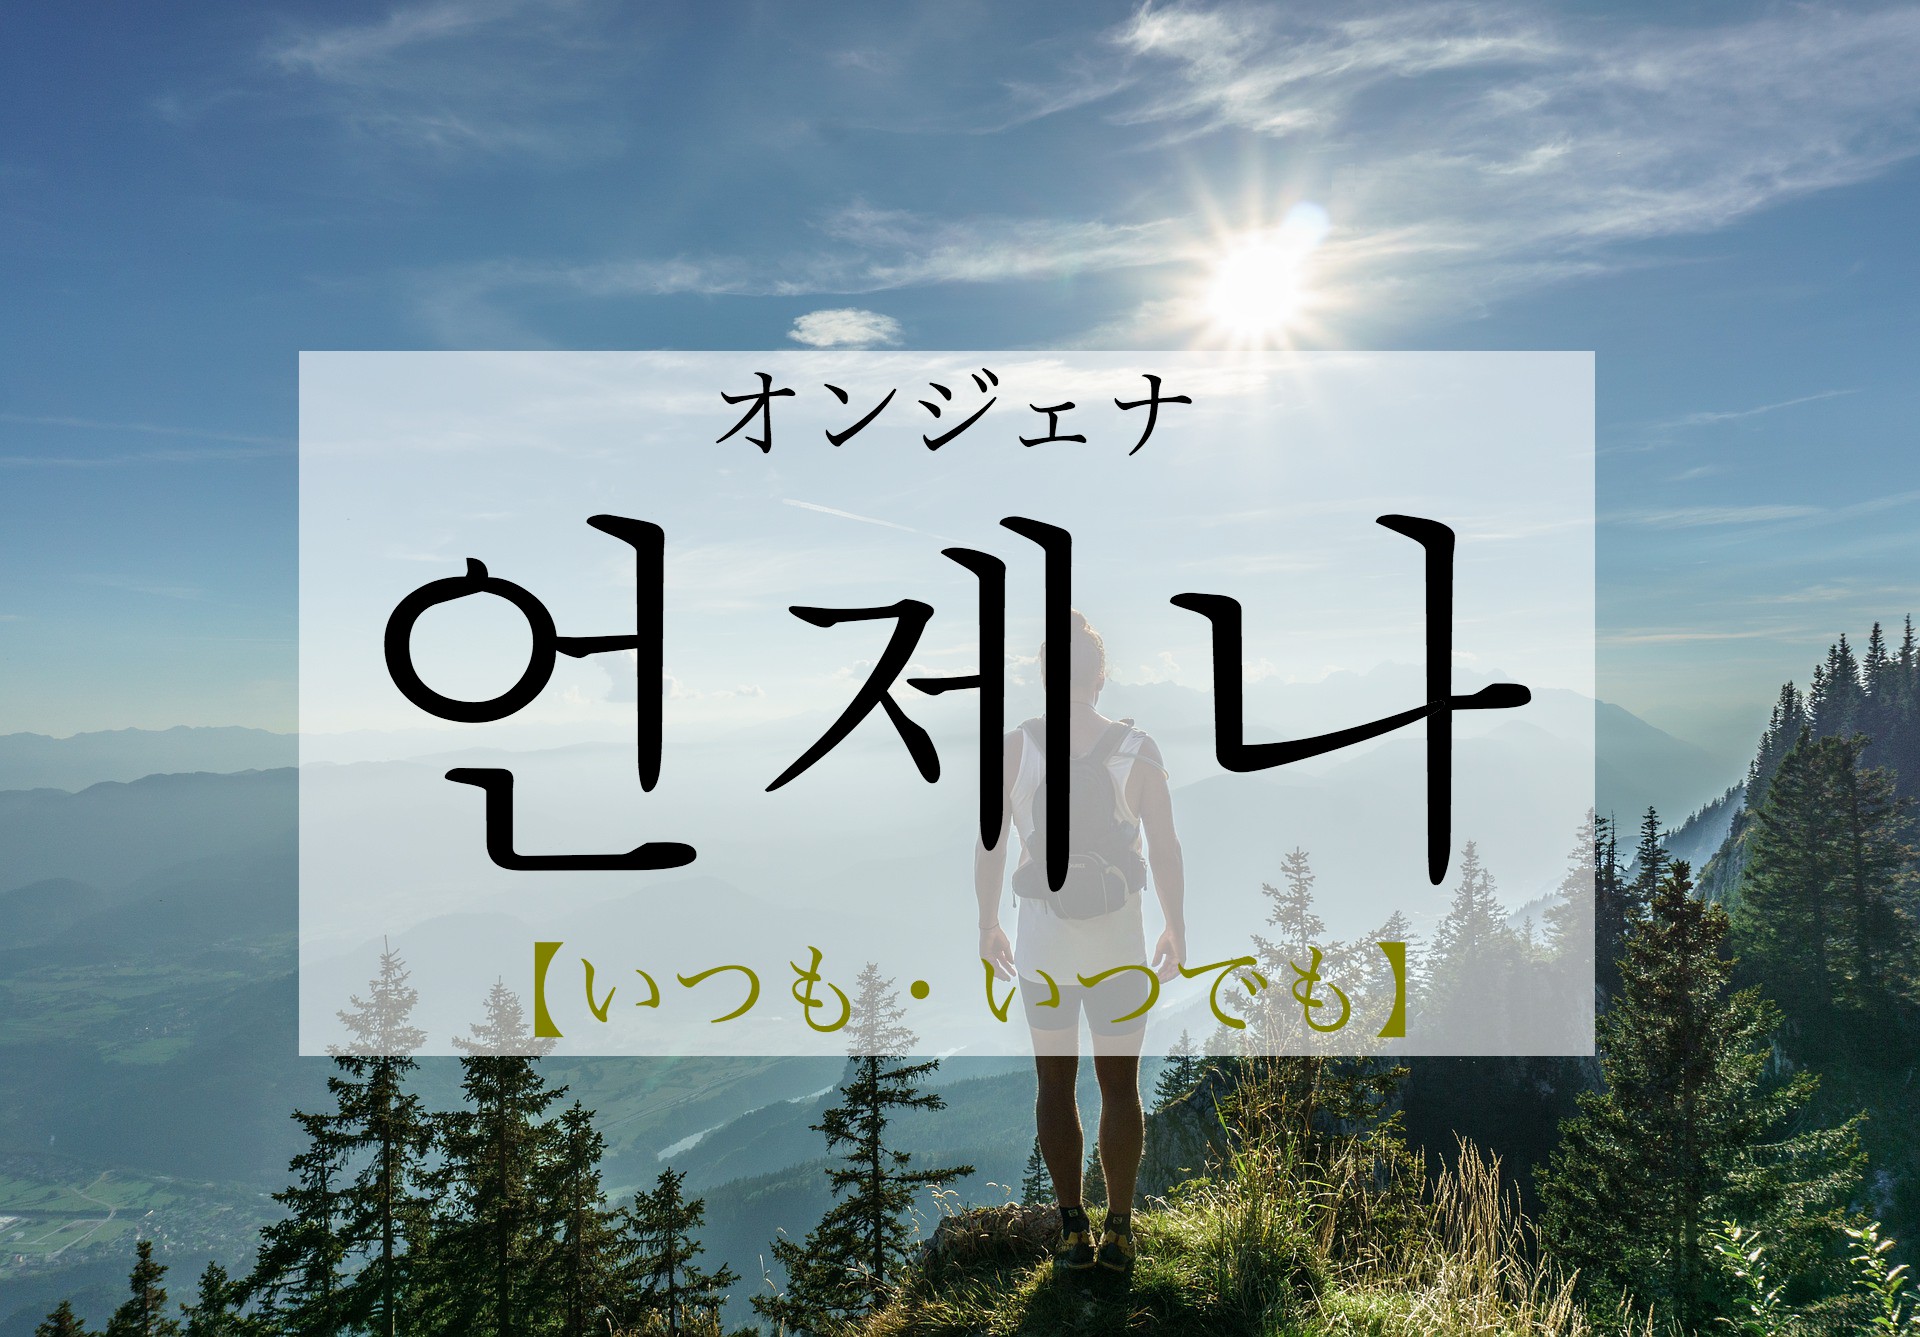 koreanword-always